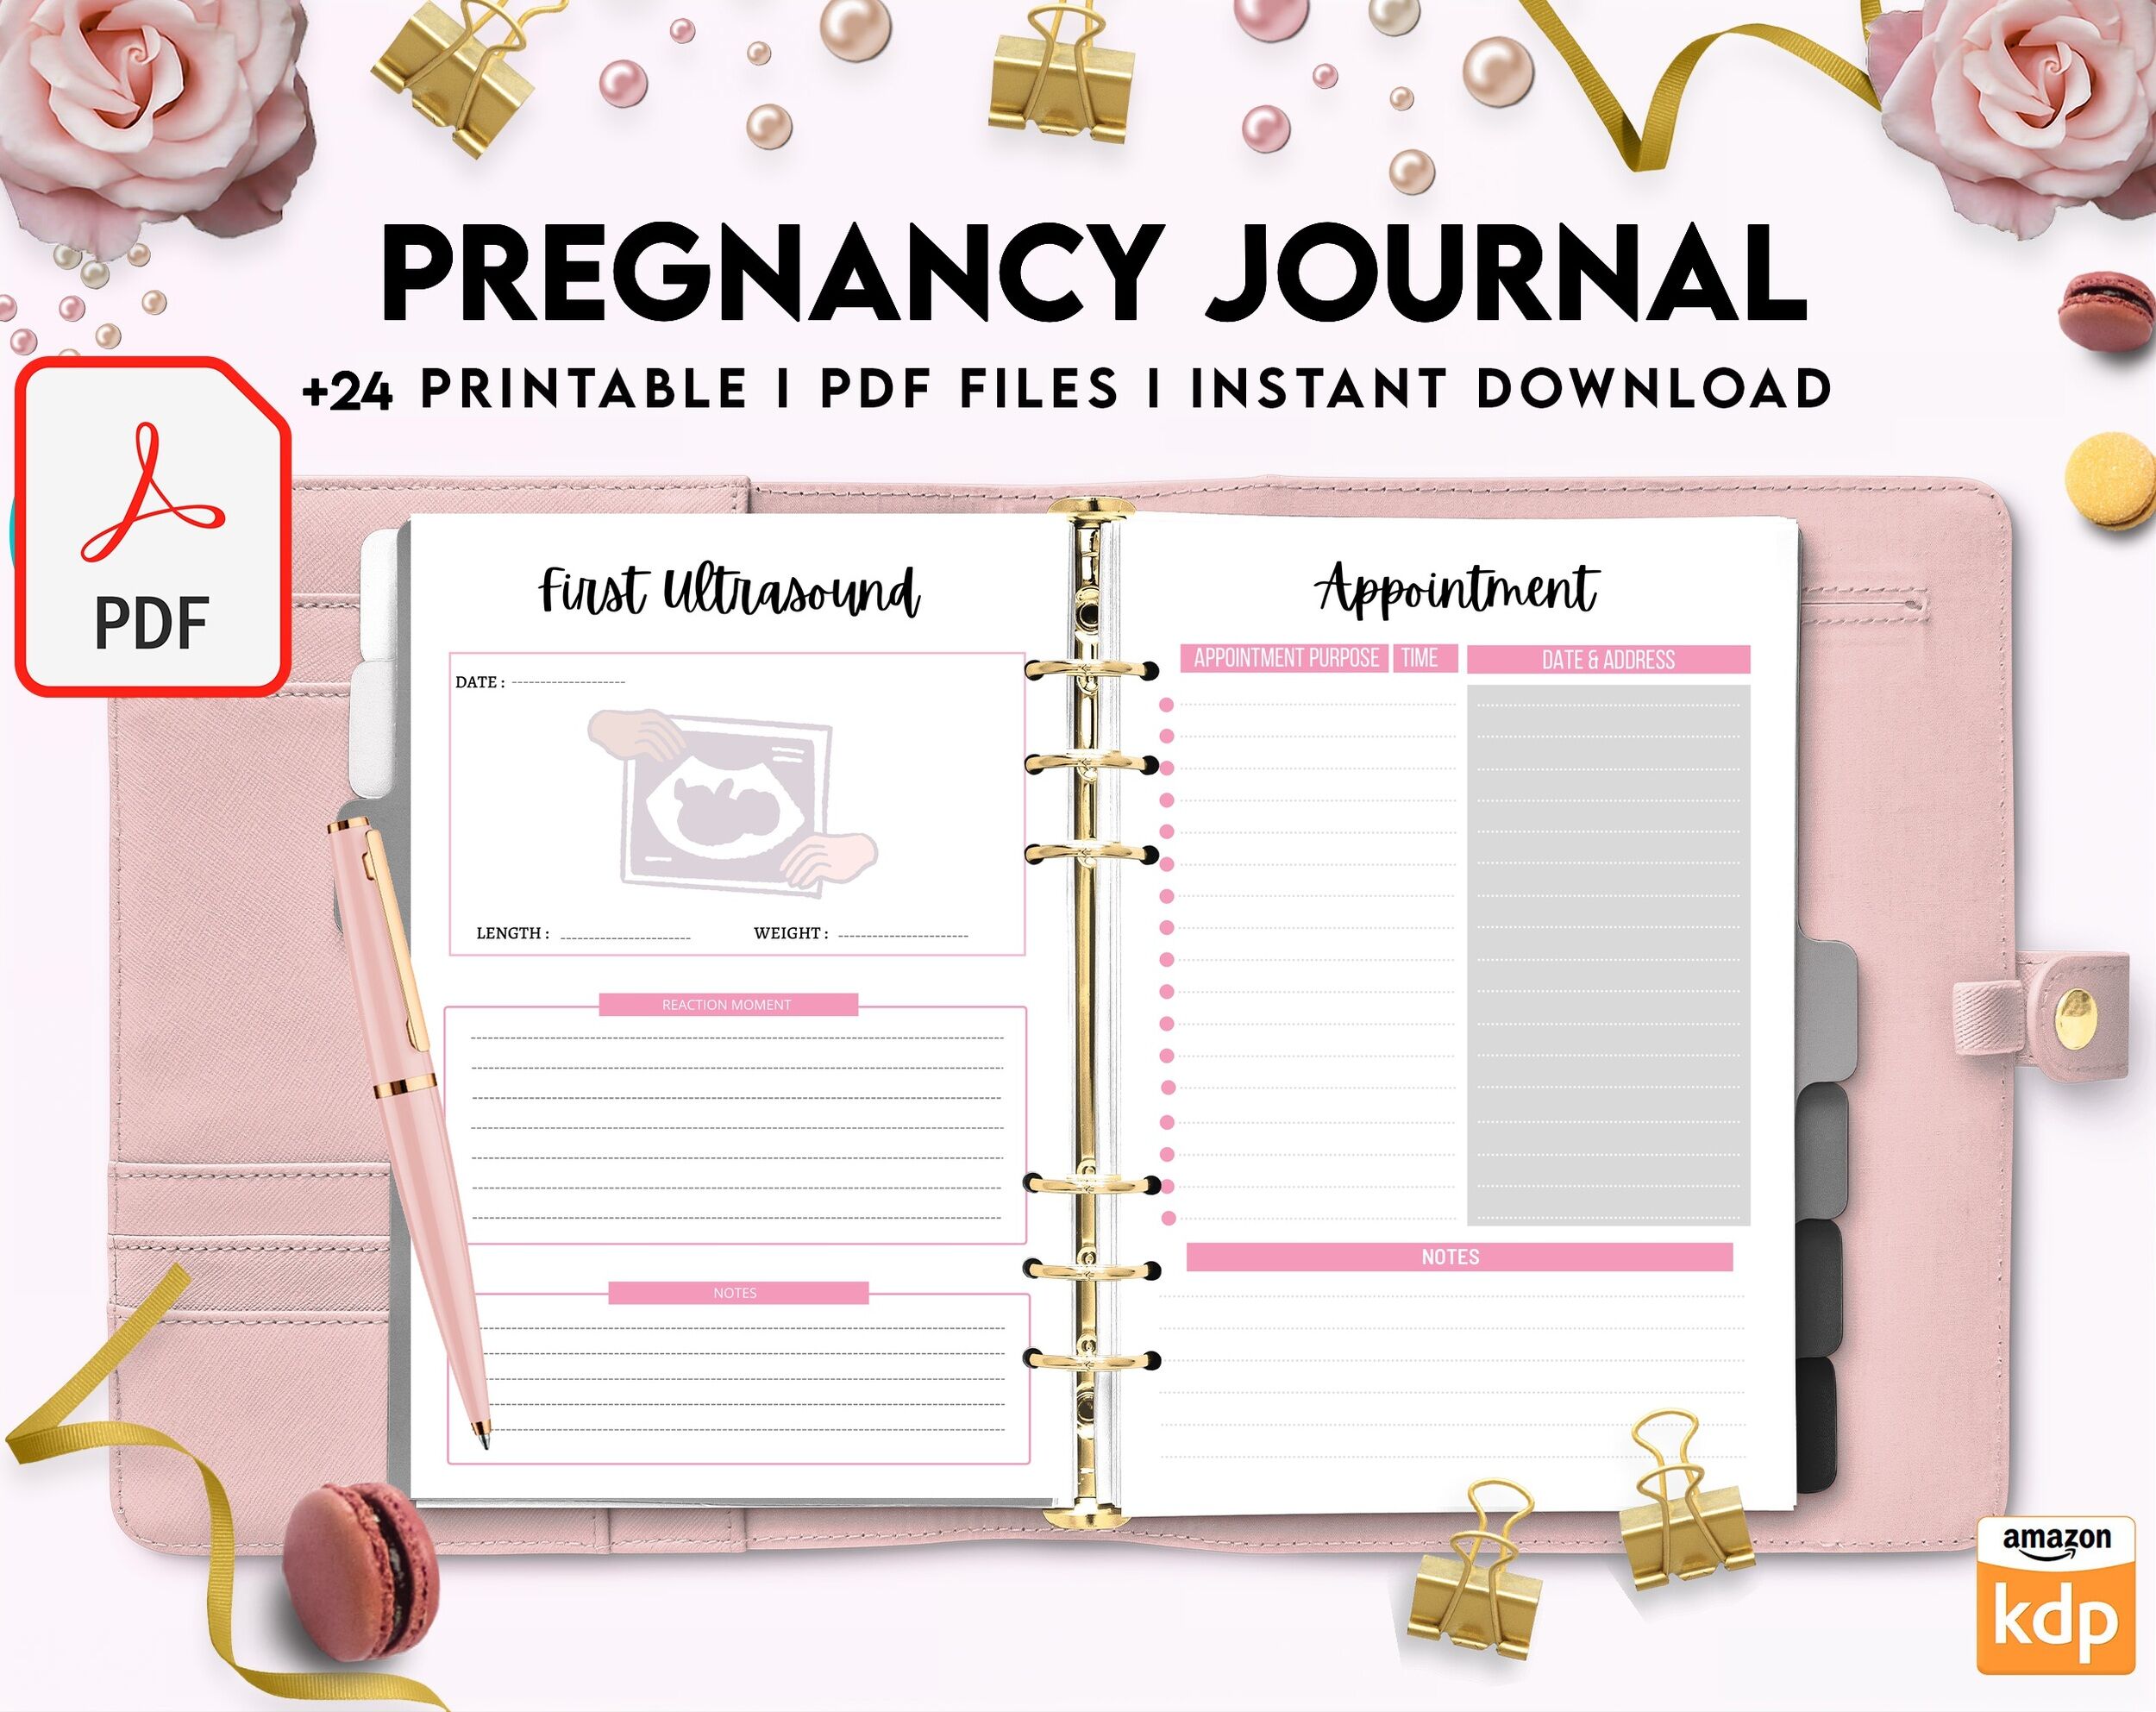 Pregnancy Journal, Pregnancy Keepsake Planner, Hospital Packing